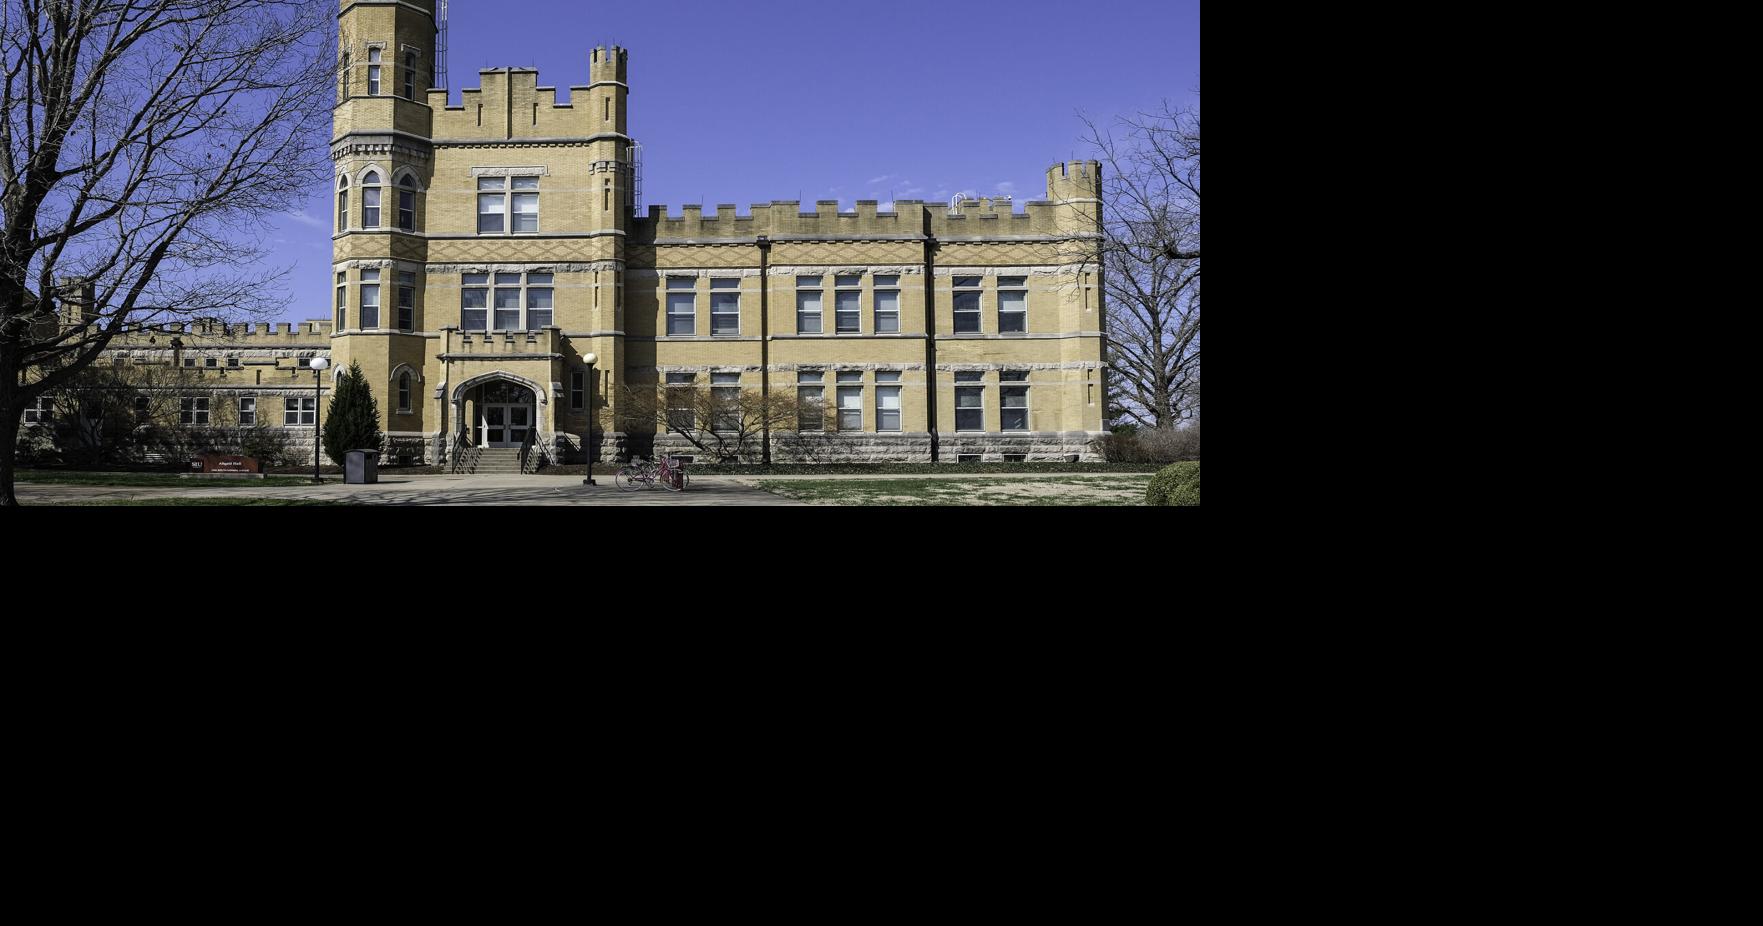 Photos: Castles at Illinois public universities